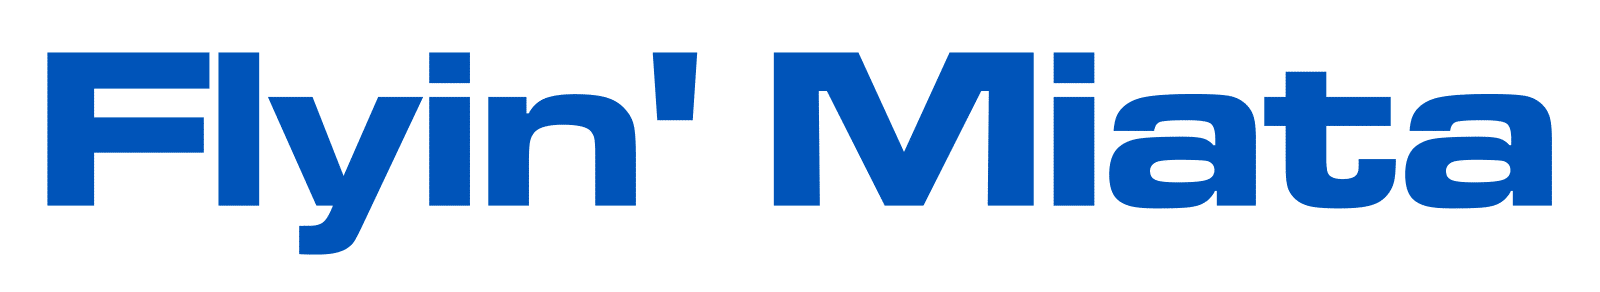 Flyin Miata Logo Larger